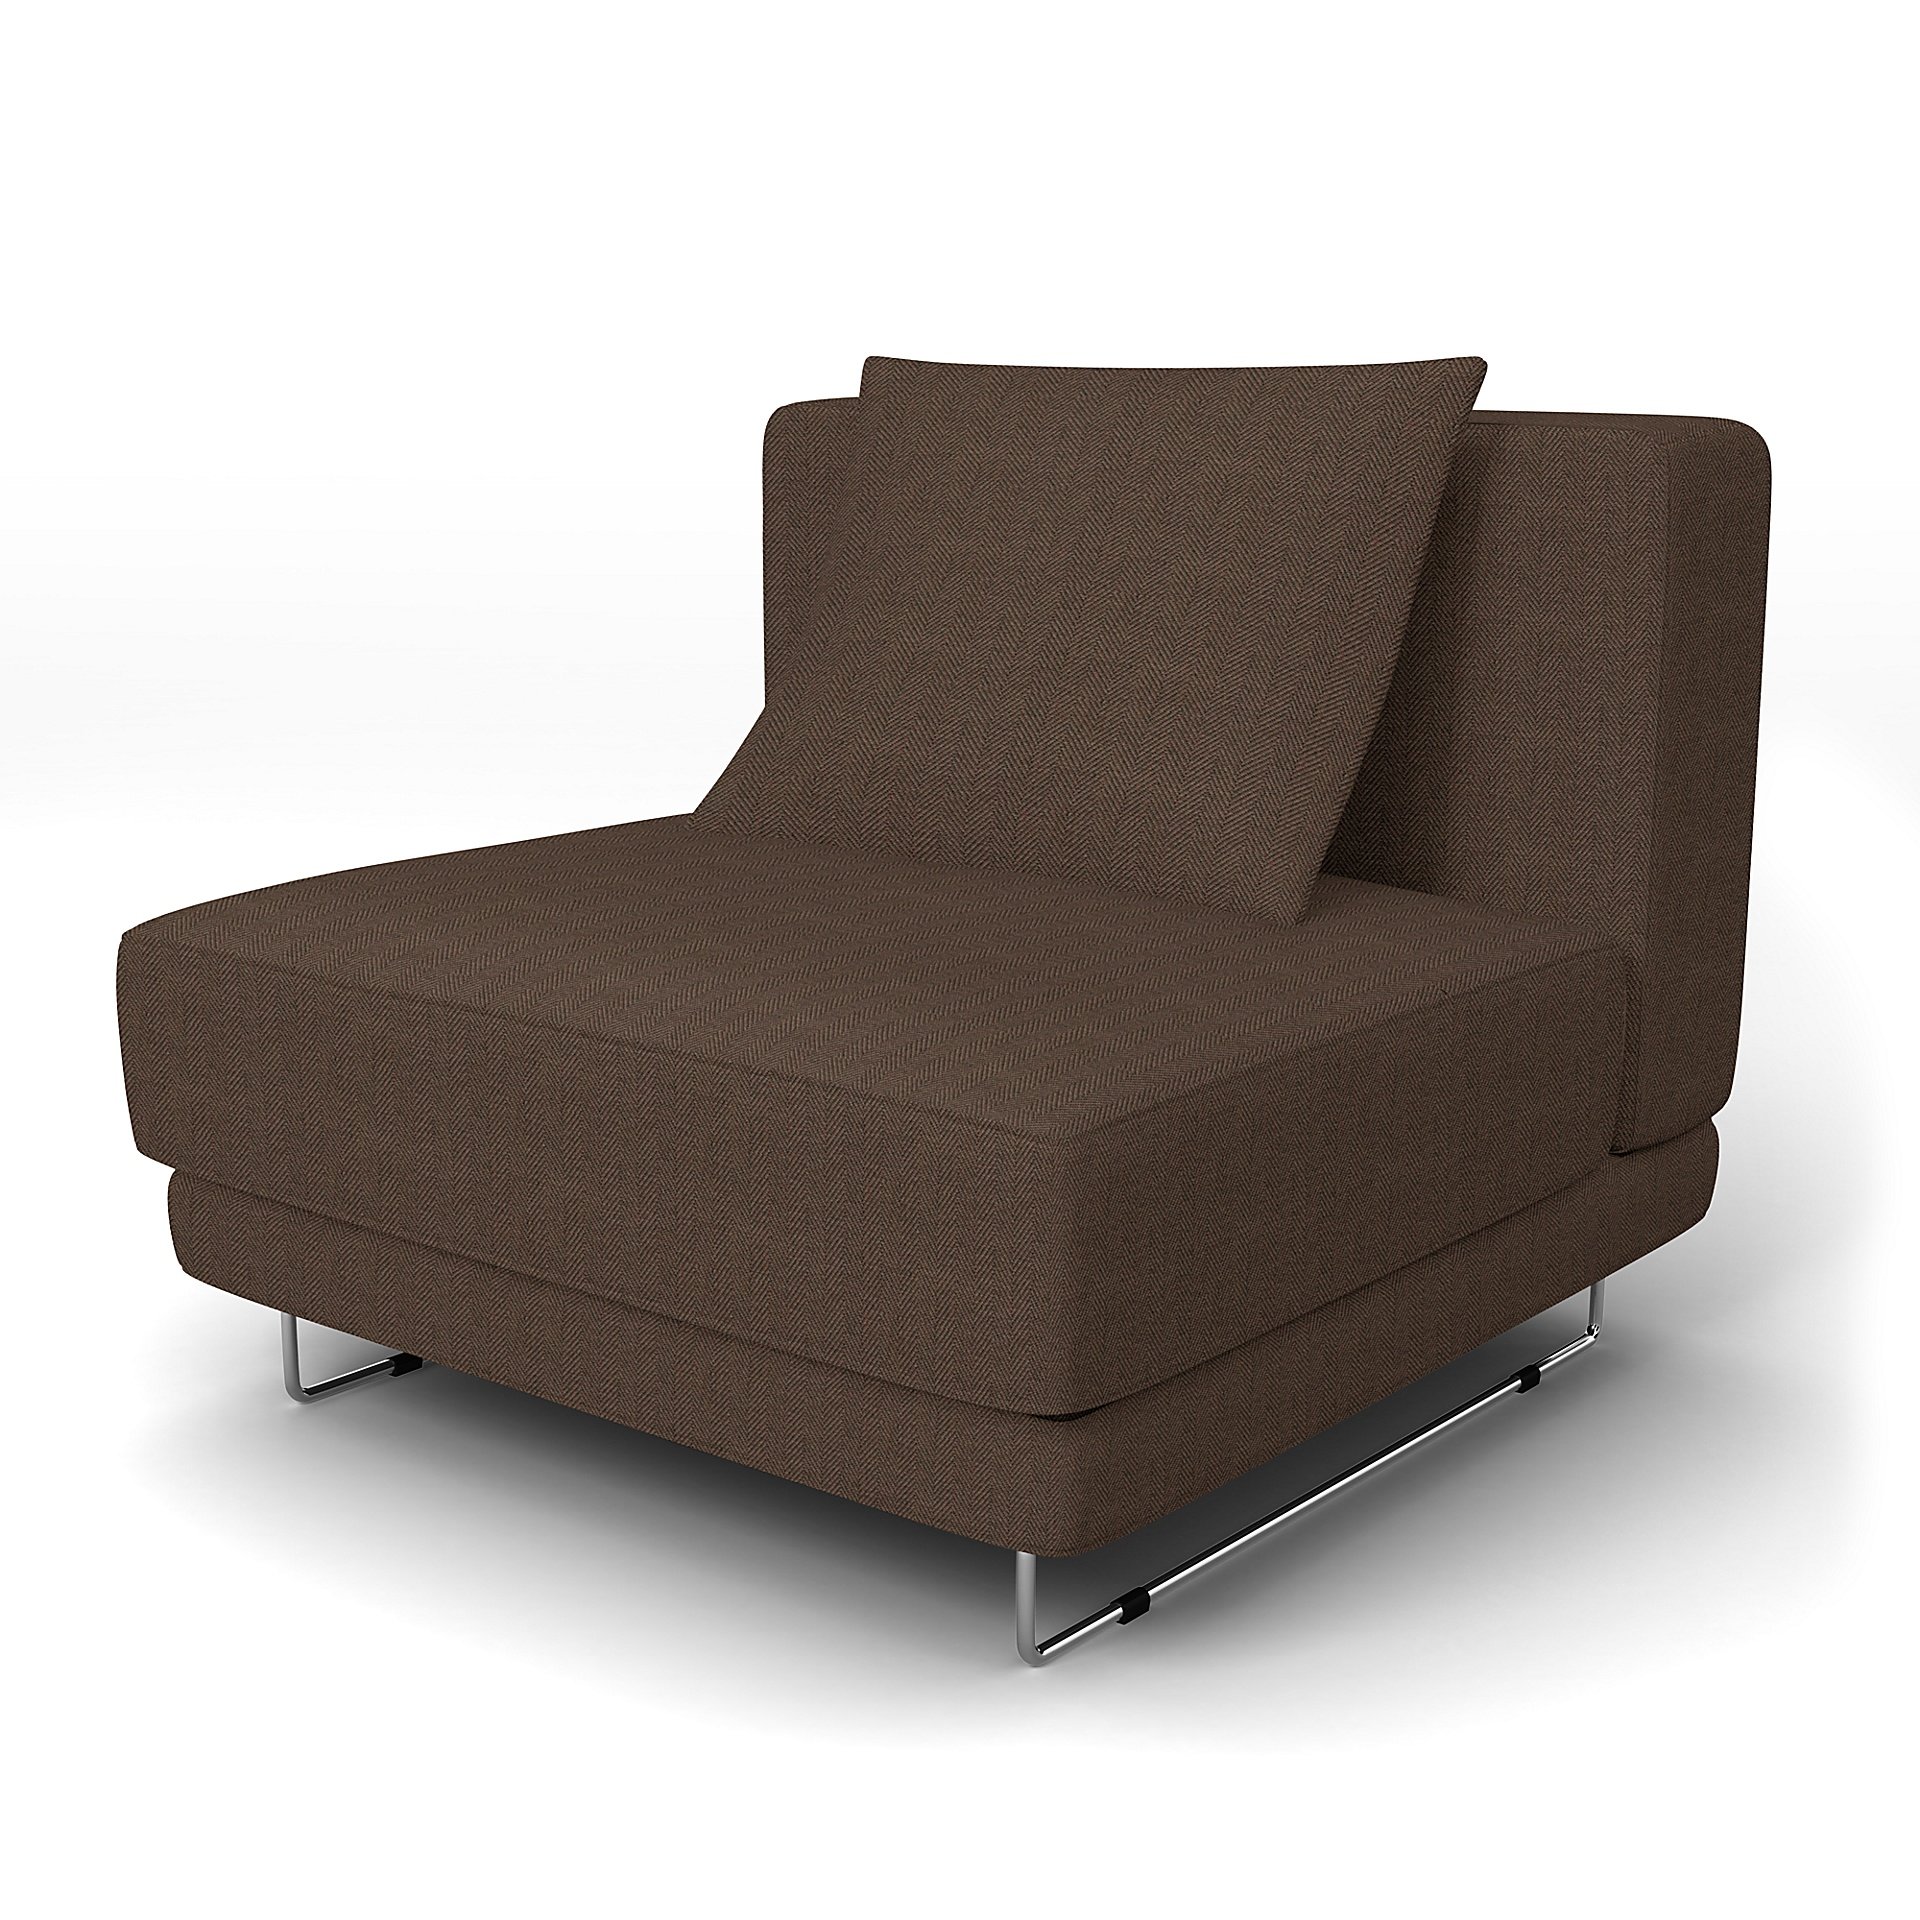 IKEA - Tylosand 1 Seat Module Cover, Chocolate, Boucle & Texture - Bemz